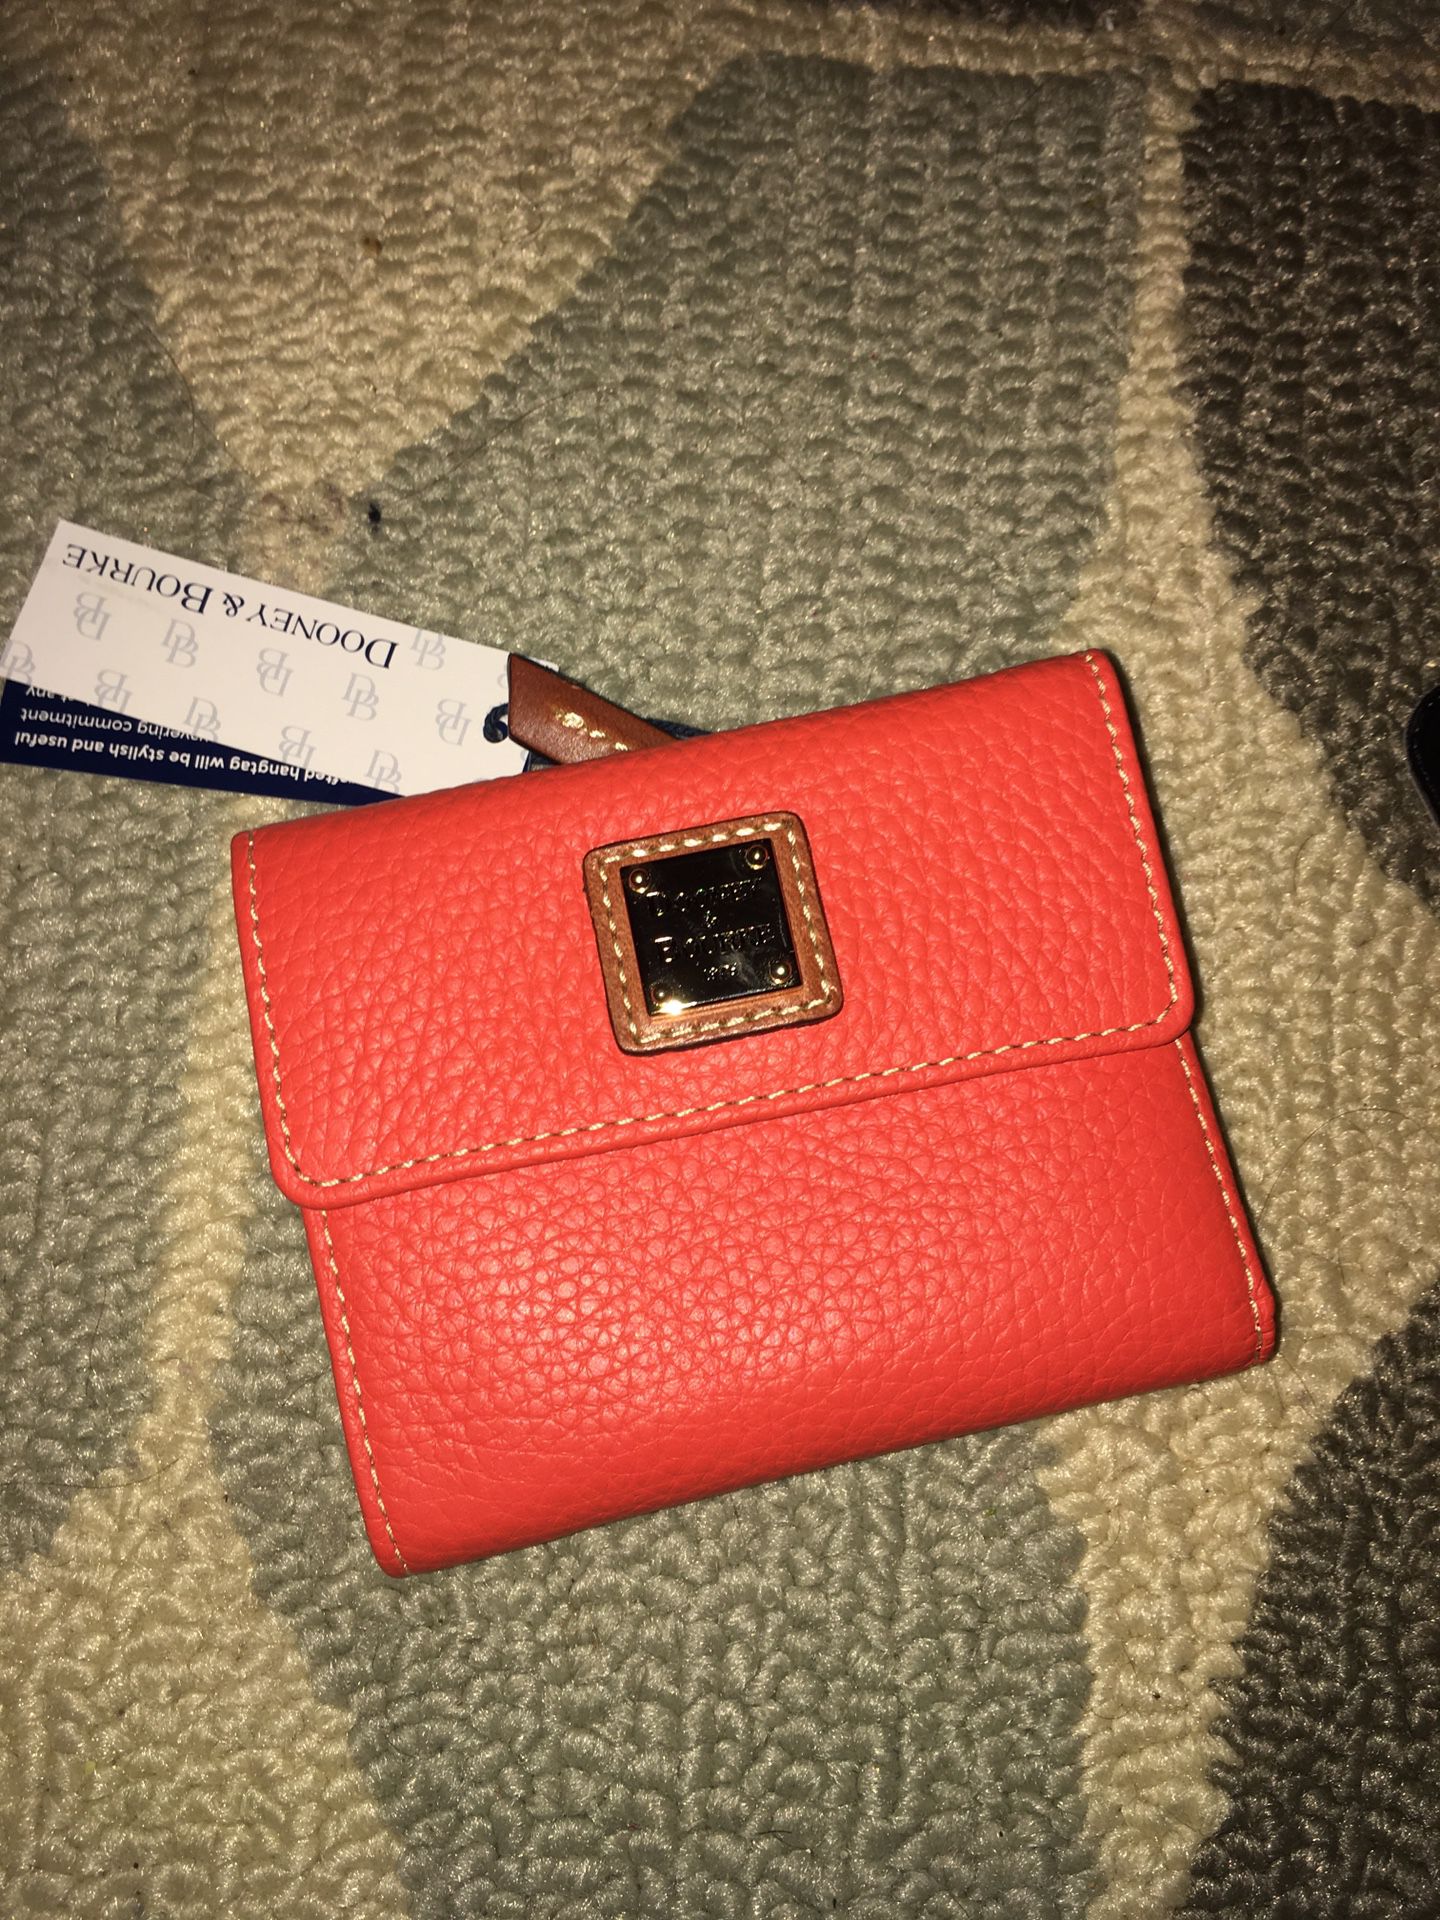 Dooney & bourke orange small wallet